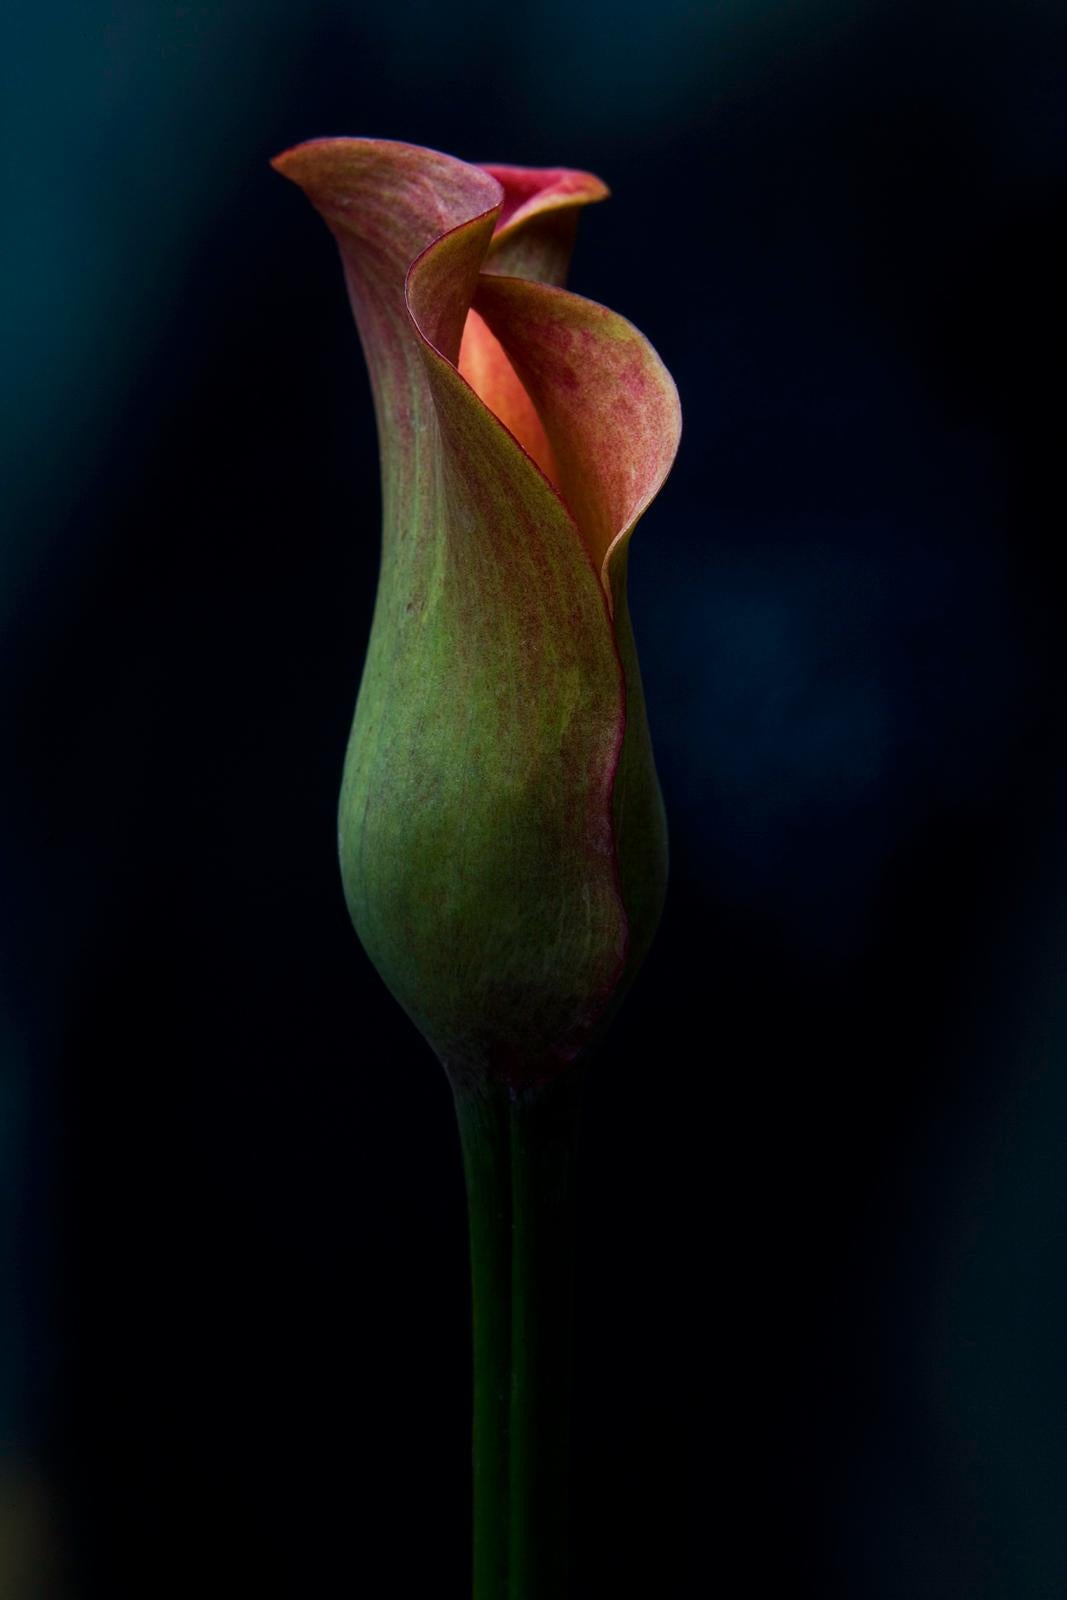 Ian Sanderson Still-Life Photograph - Signed limited edition fine art print, Romantic photo, Black Red Green, Flower 2